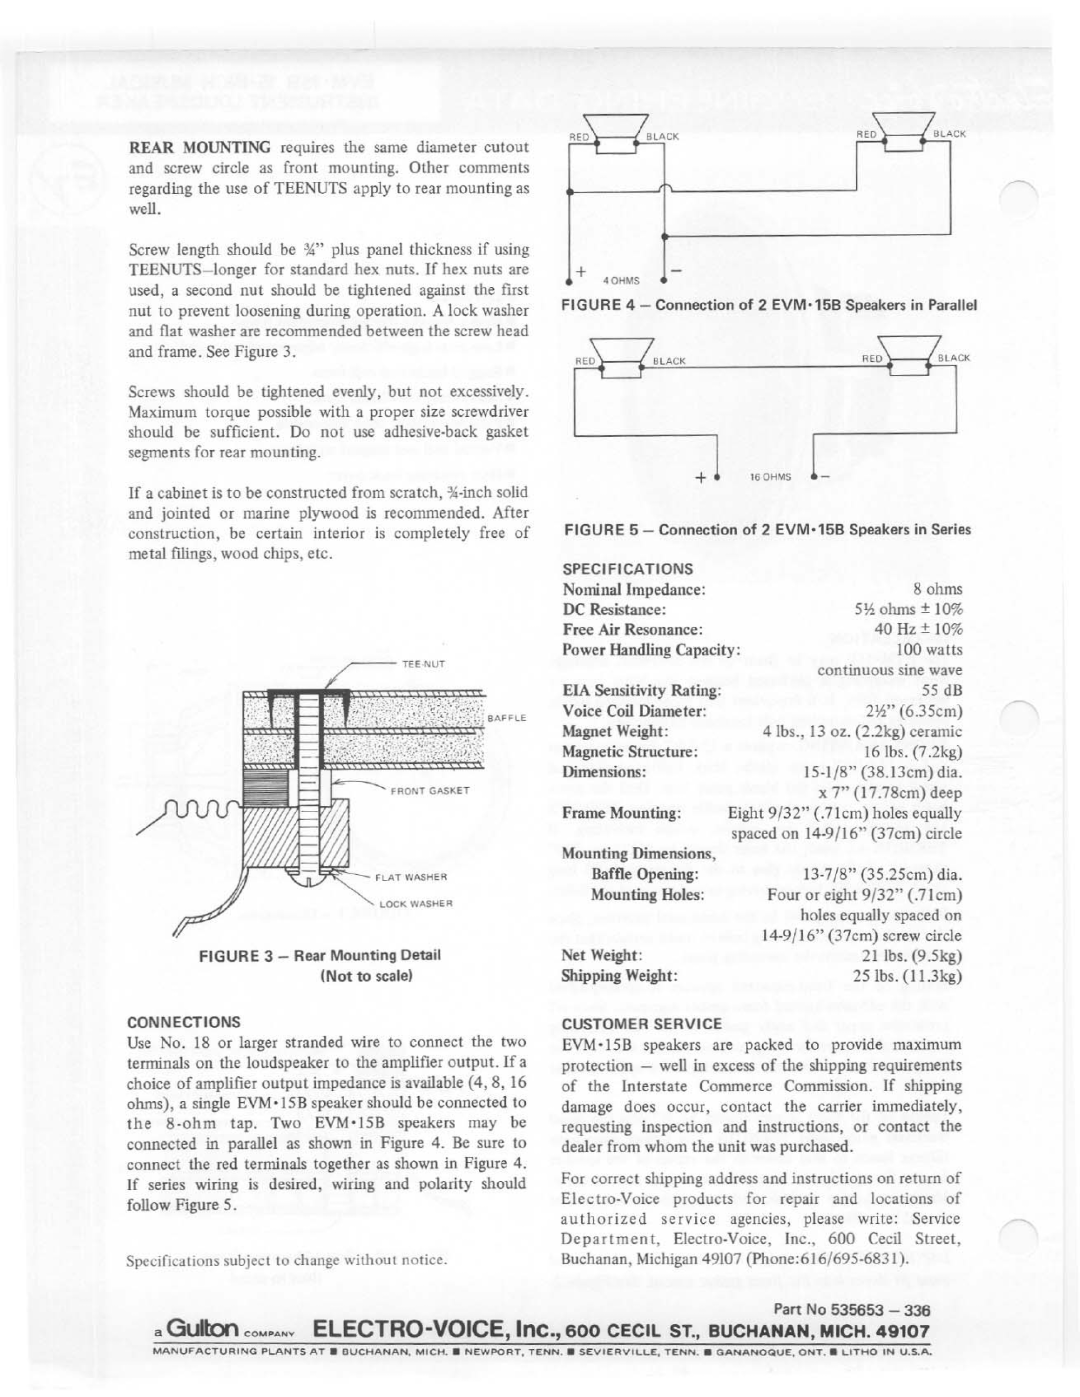 Electro-Voice EVM-15B manual 